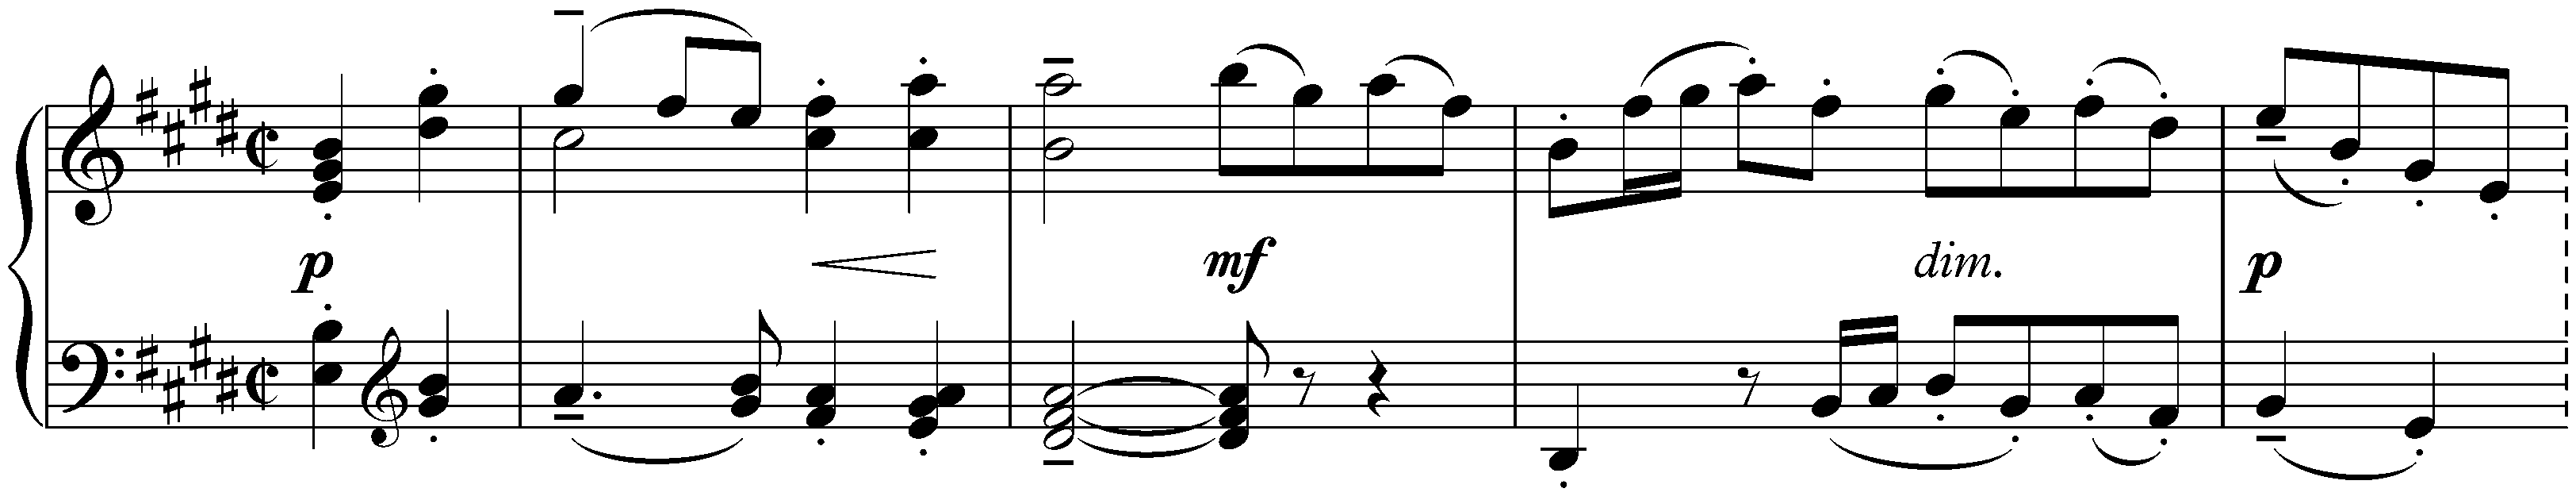 Prélude, Gavotte and Gigue from the Violin Partita in E major (Johann Sebastian Bach); 2. Gavotte